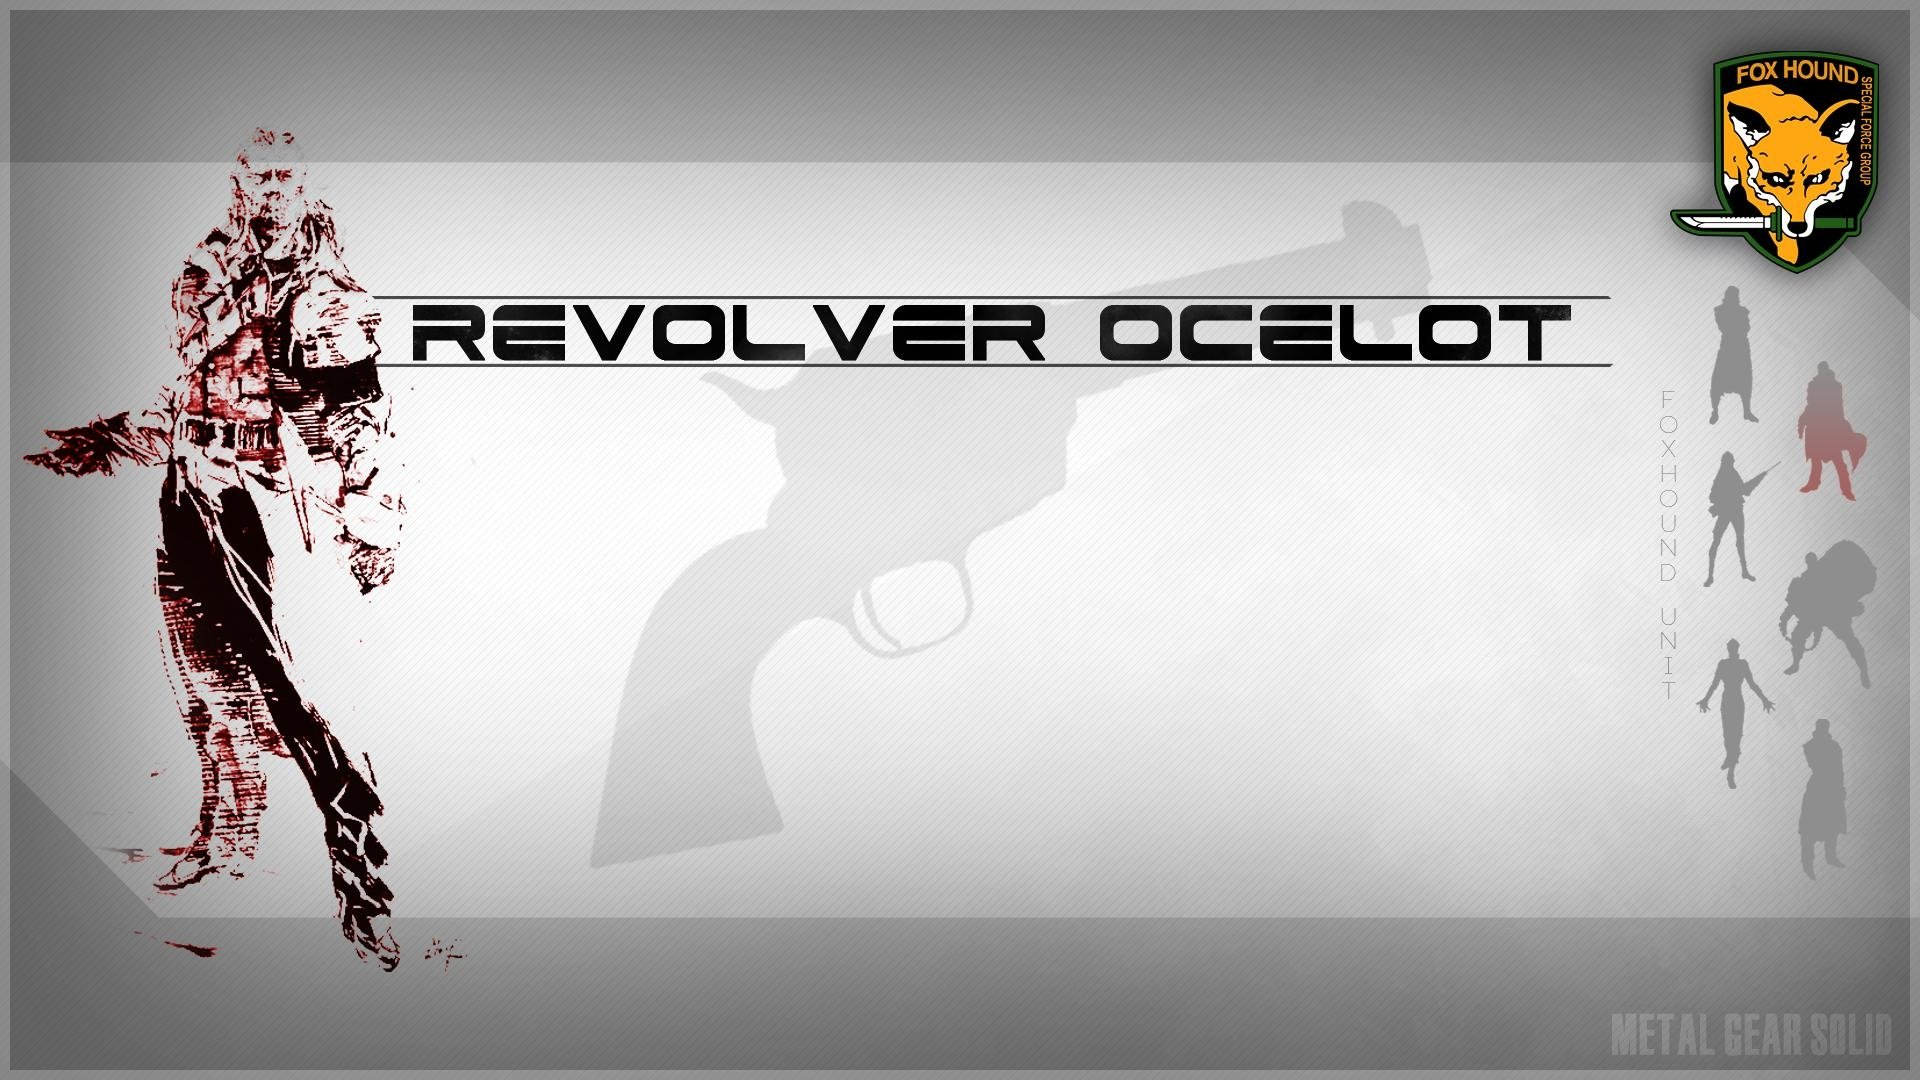 1920x1080 Revolver Ocelot, real name Adamska and also known as Adam by Yoji Shinkawa